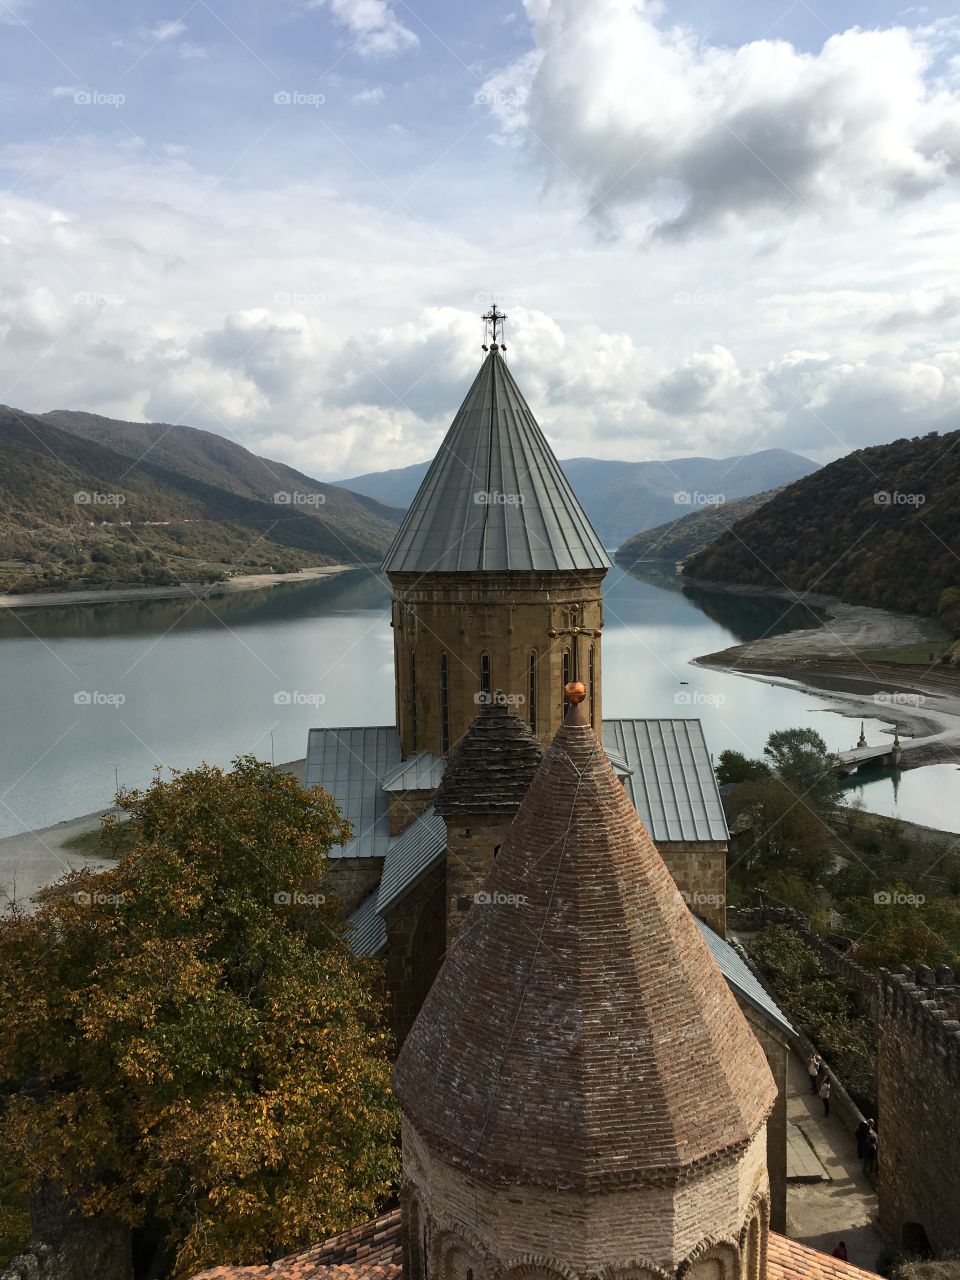 Monastery at Georgia
